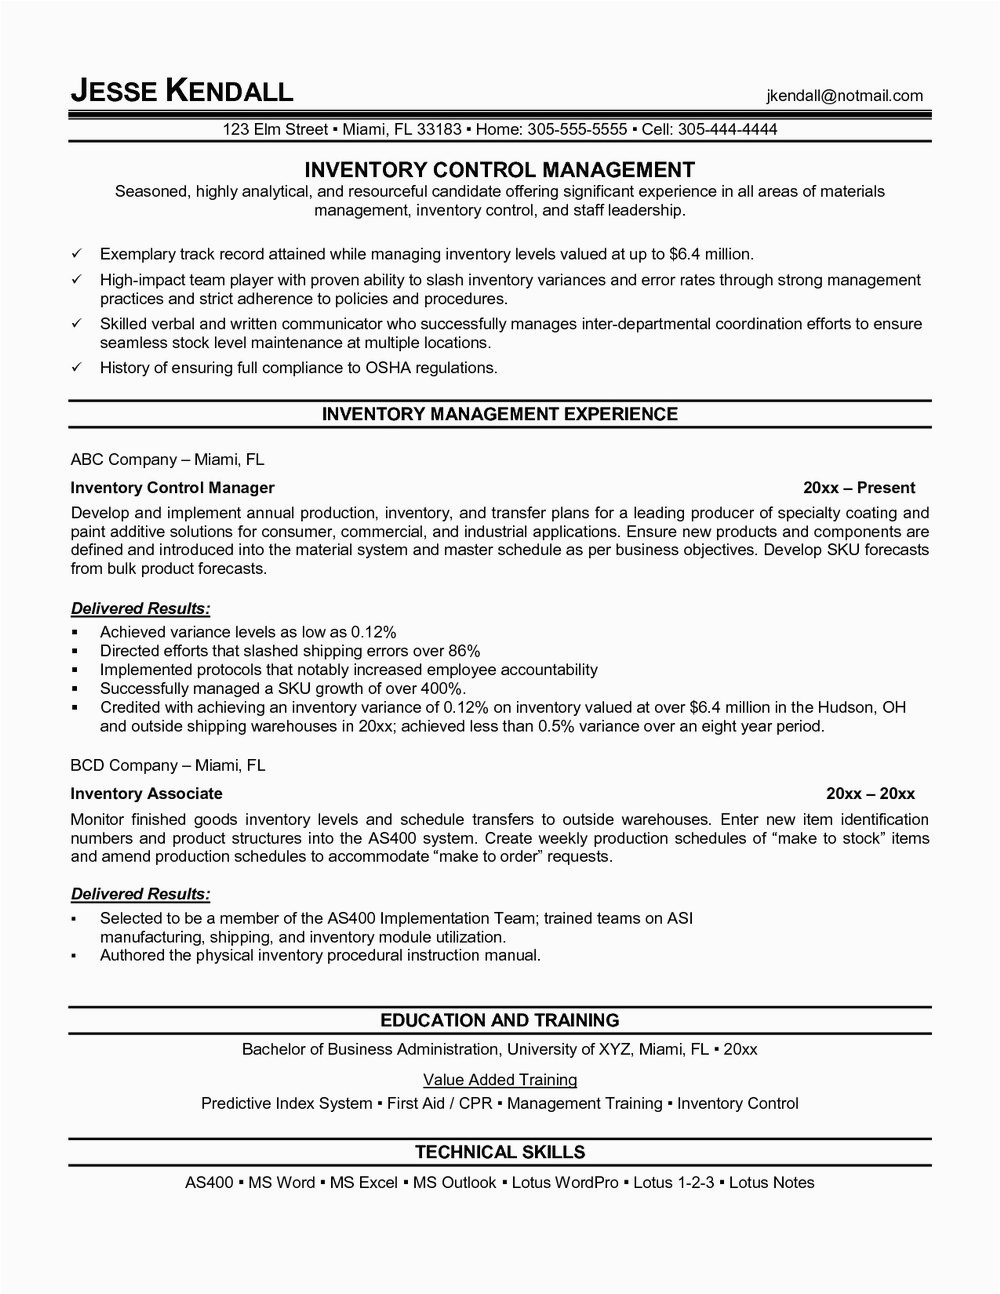 Sample Resume for Medical assistant Entry Level Resume Templates for Medical assistants Level Entry